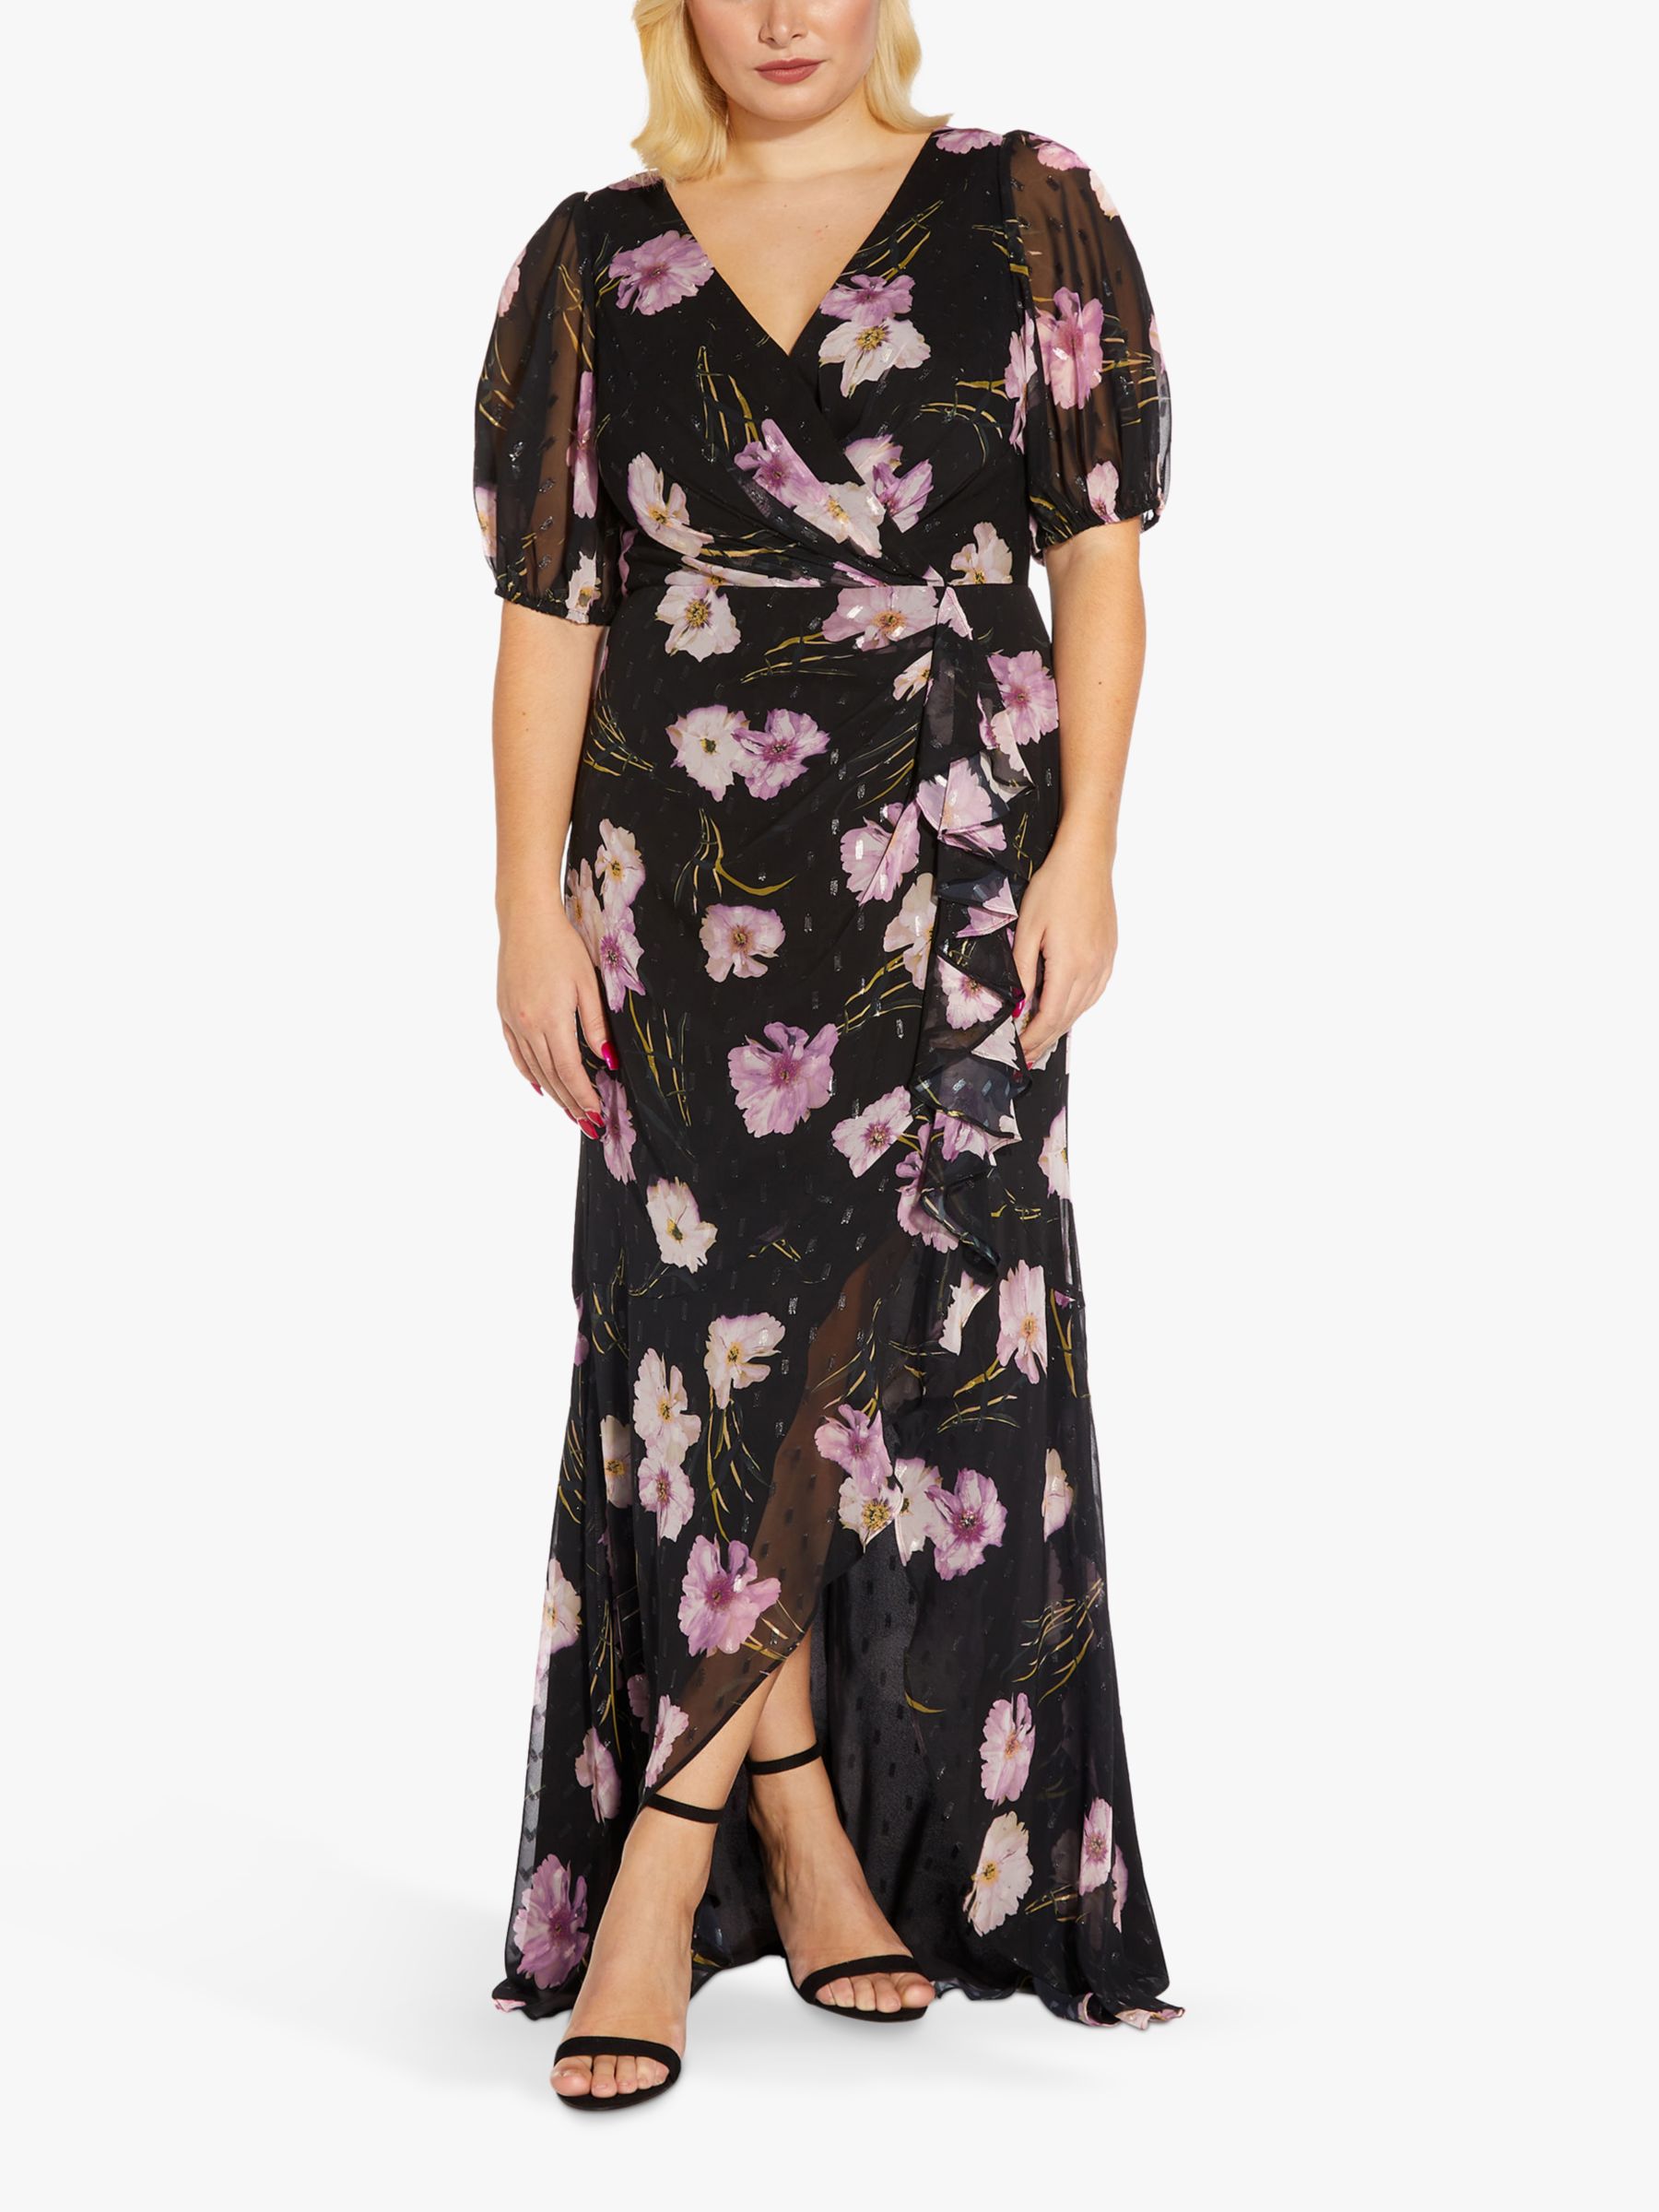 Adrianna Papell Plus Size Floral Chiffon Wrap Maxi Dress, Black/Multi